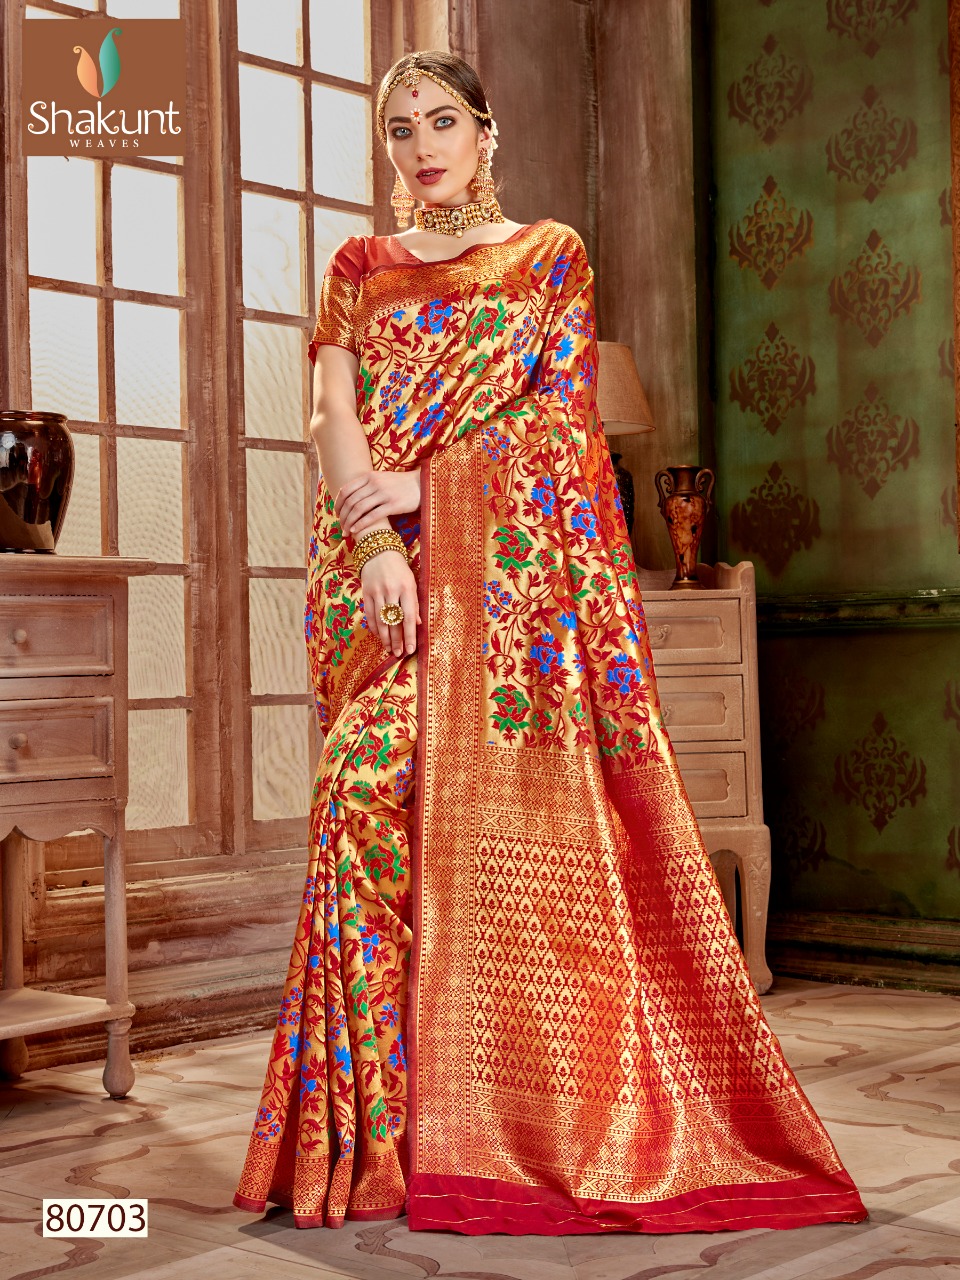 shakunt weaves yogini fancy designer collection of sarees